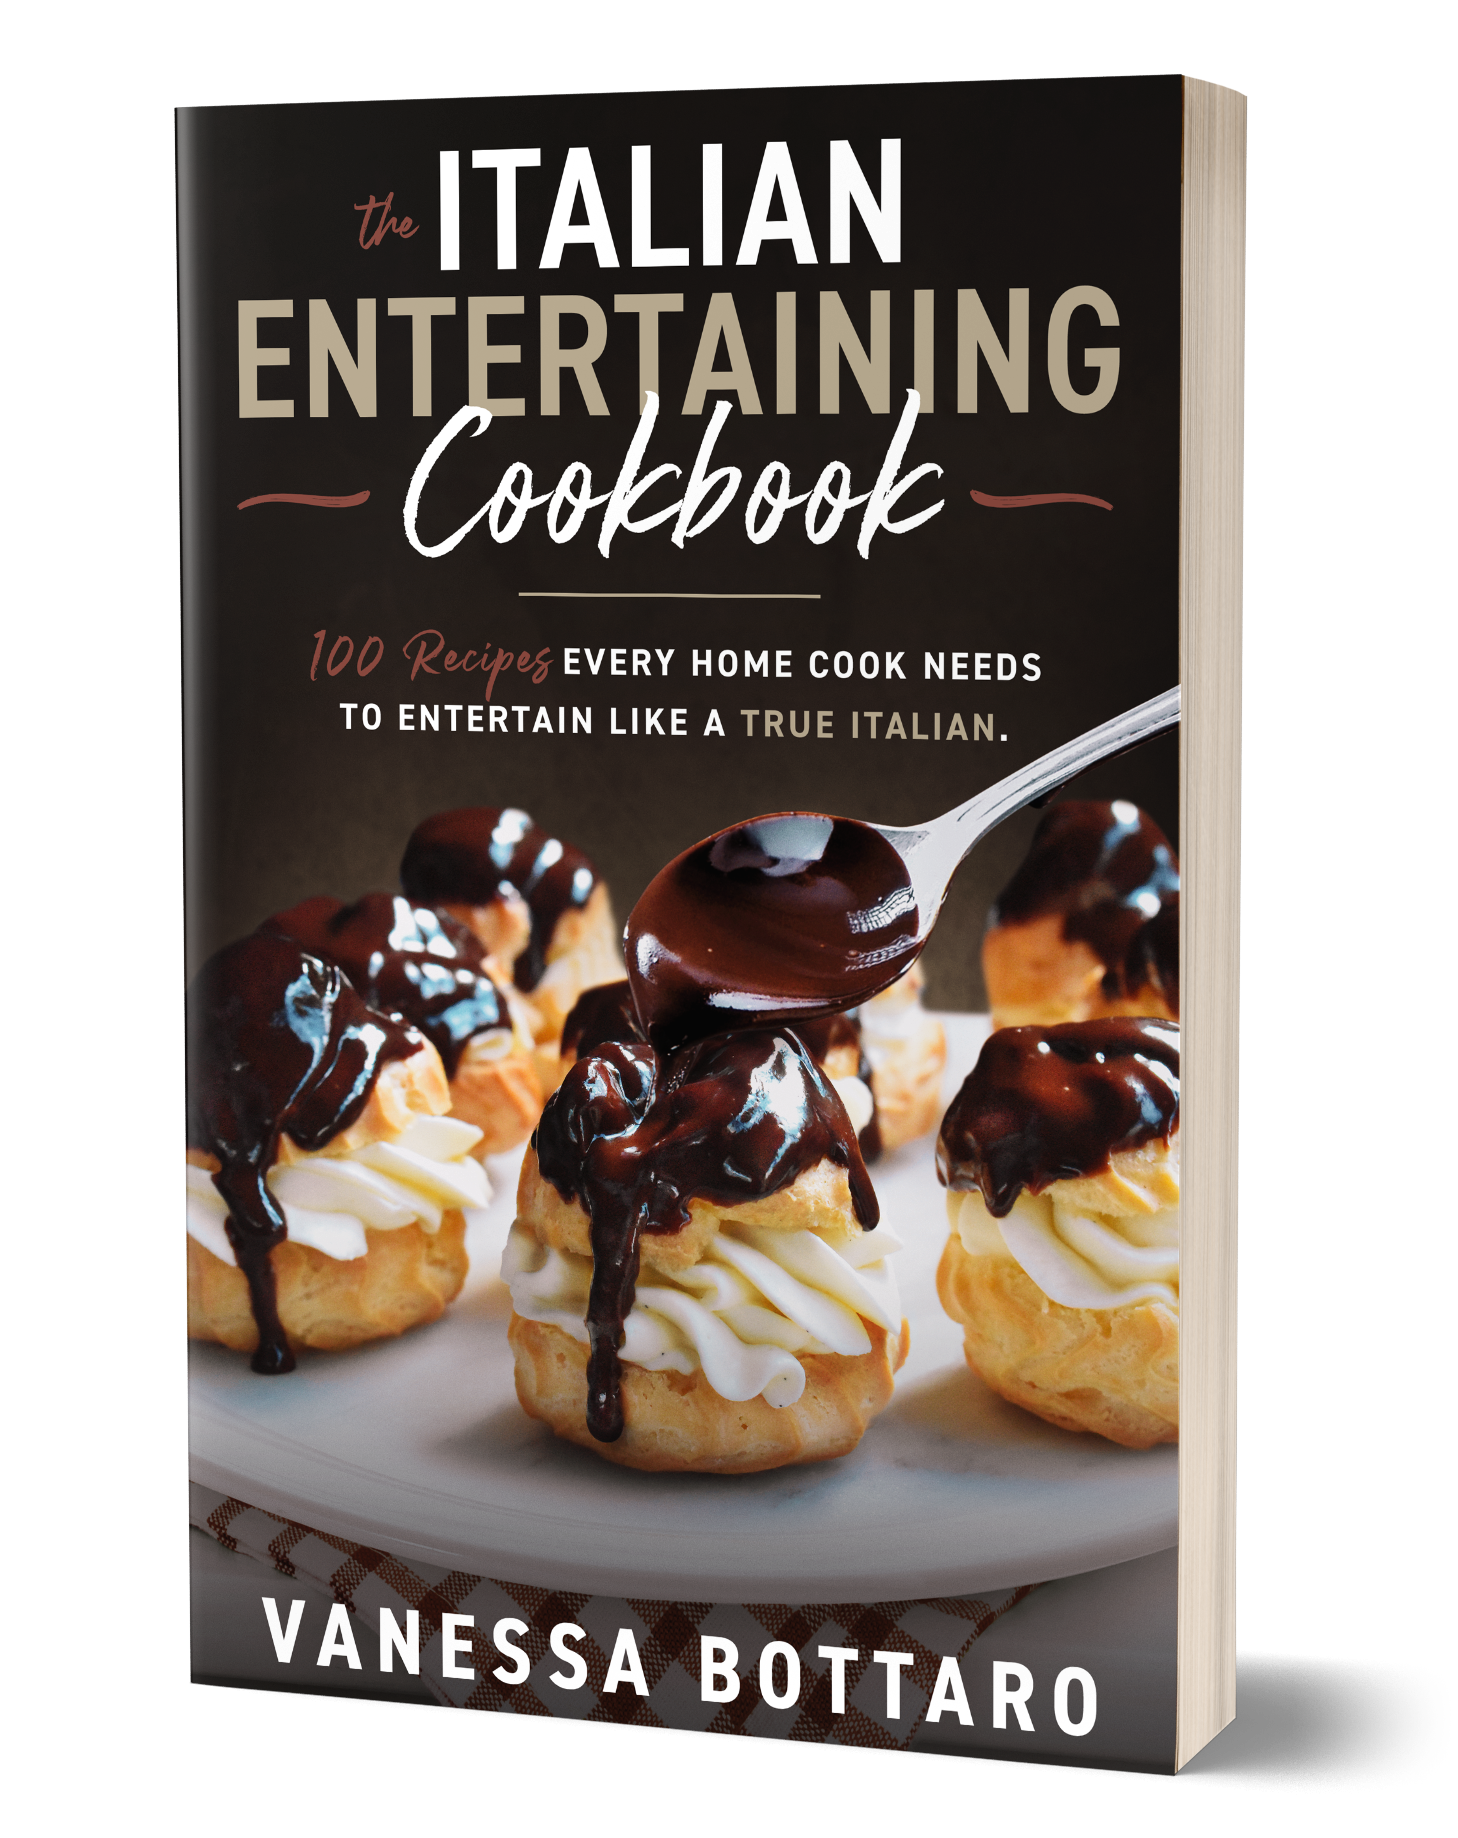 Introducing my new authentic Italian cookbook